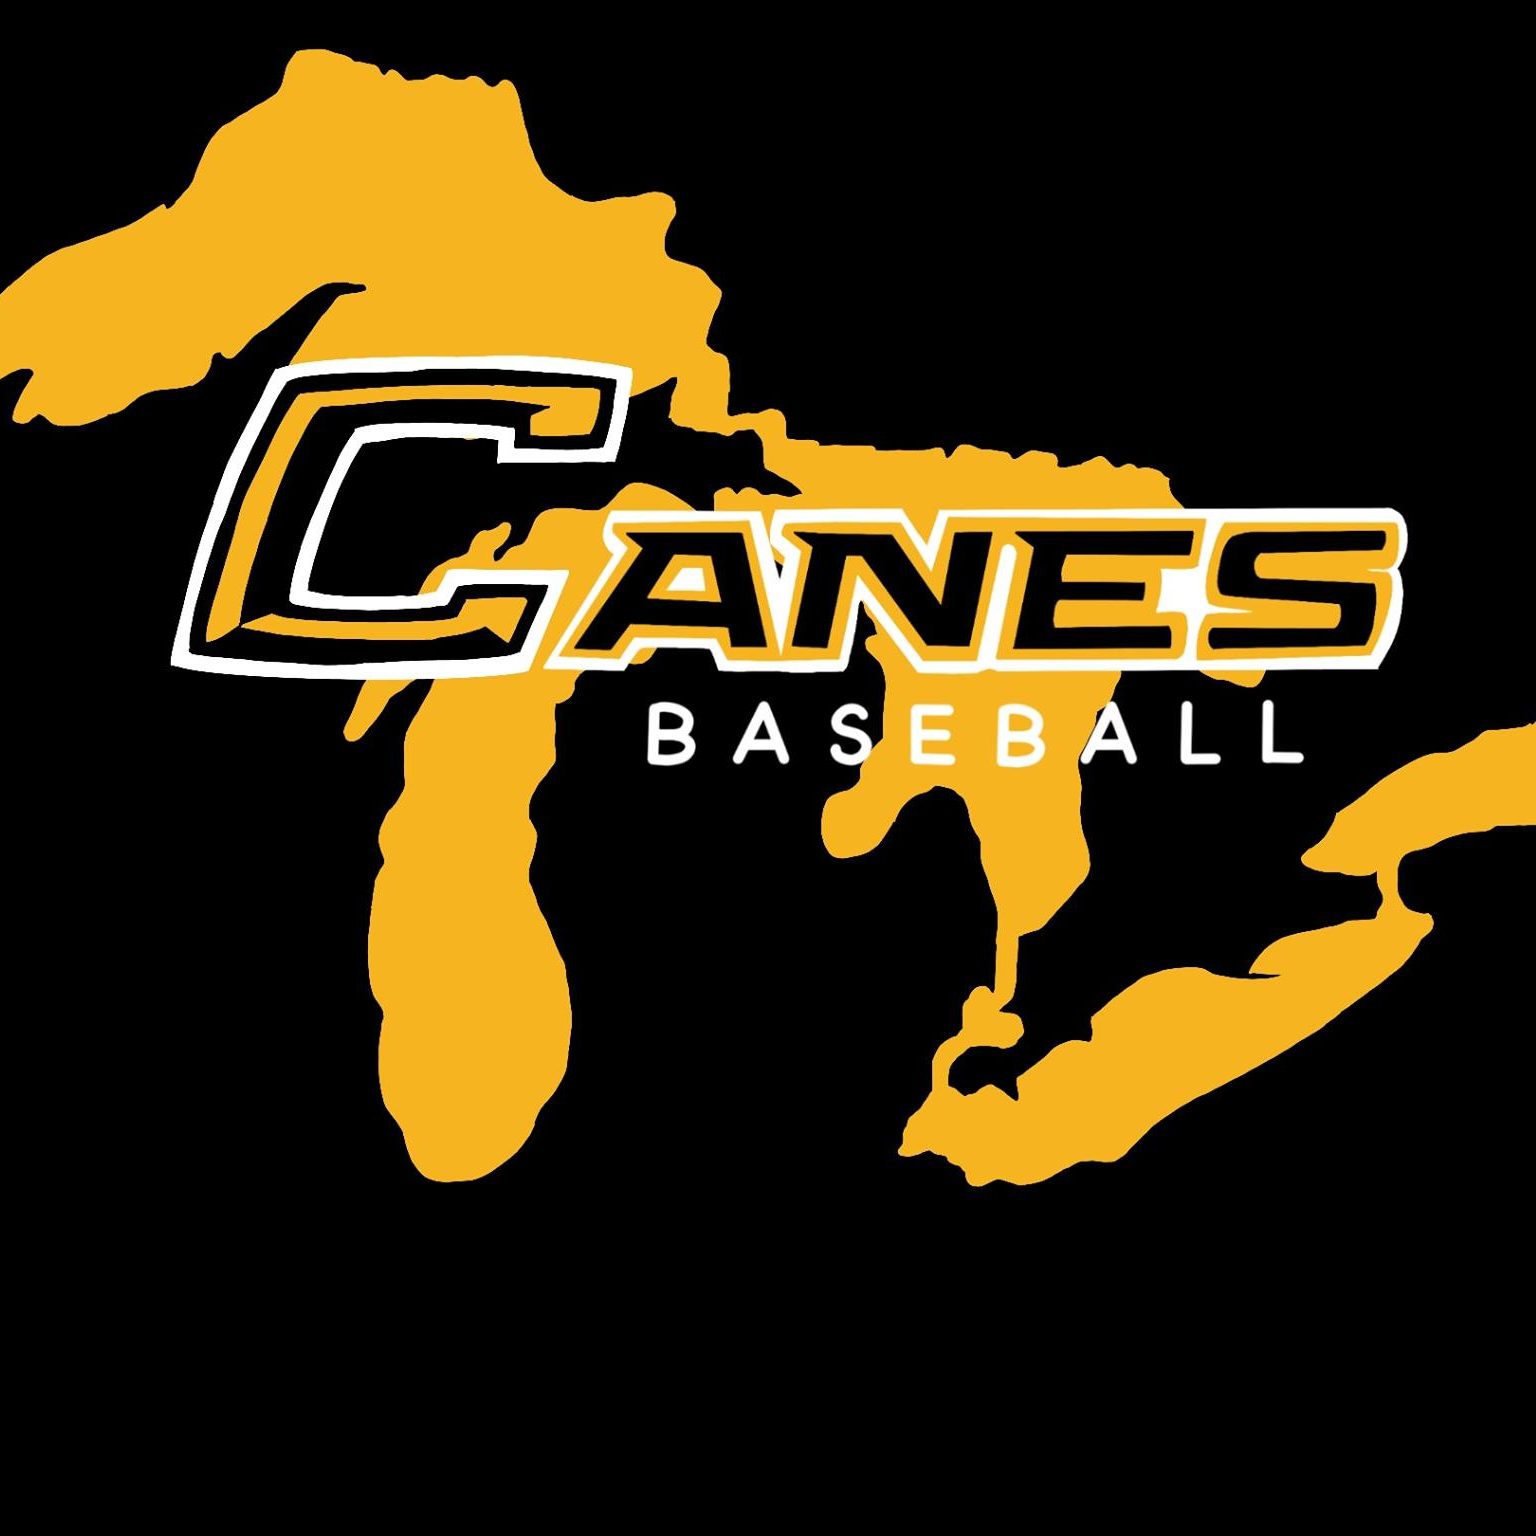 Canes Great Lakes youth travel baseball Mishawaka Indiana BaseballConnected